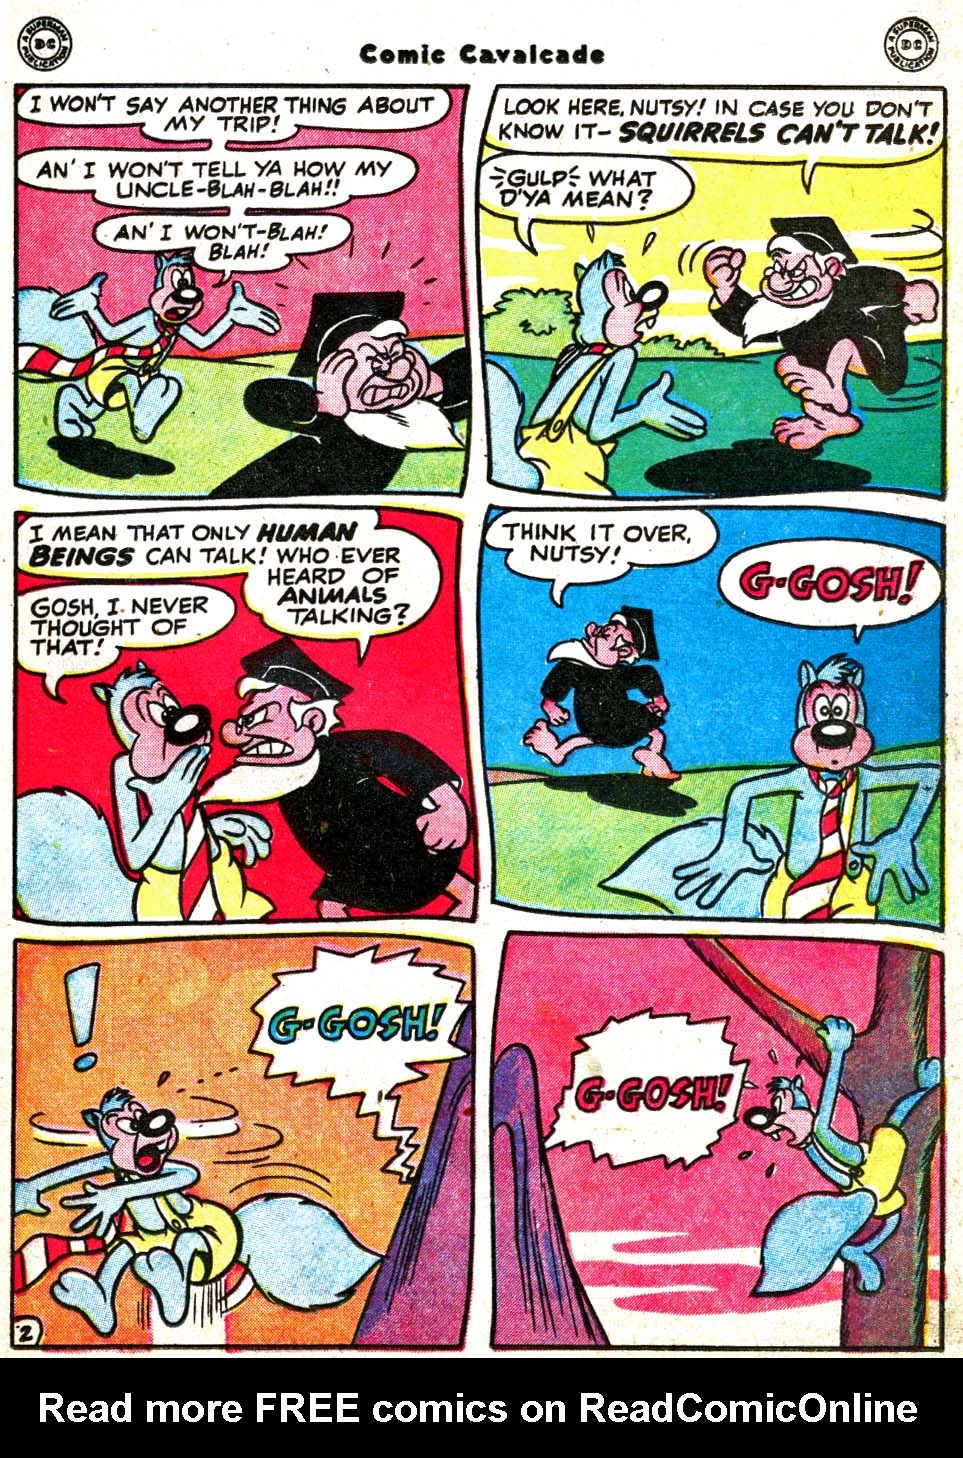 Comic Cavalcade issue 31 - Page 37